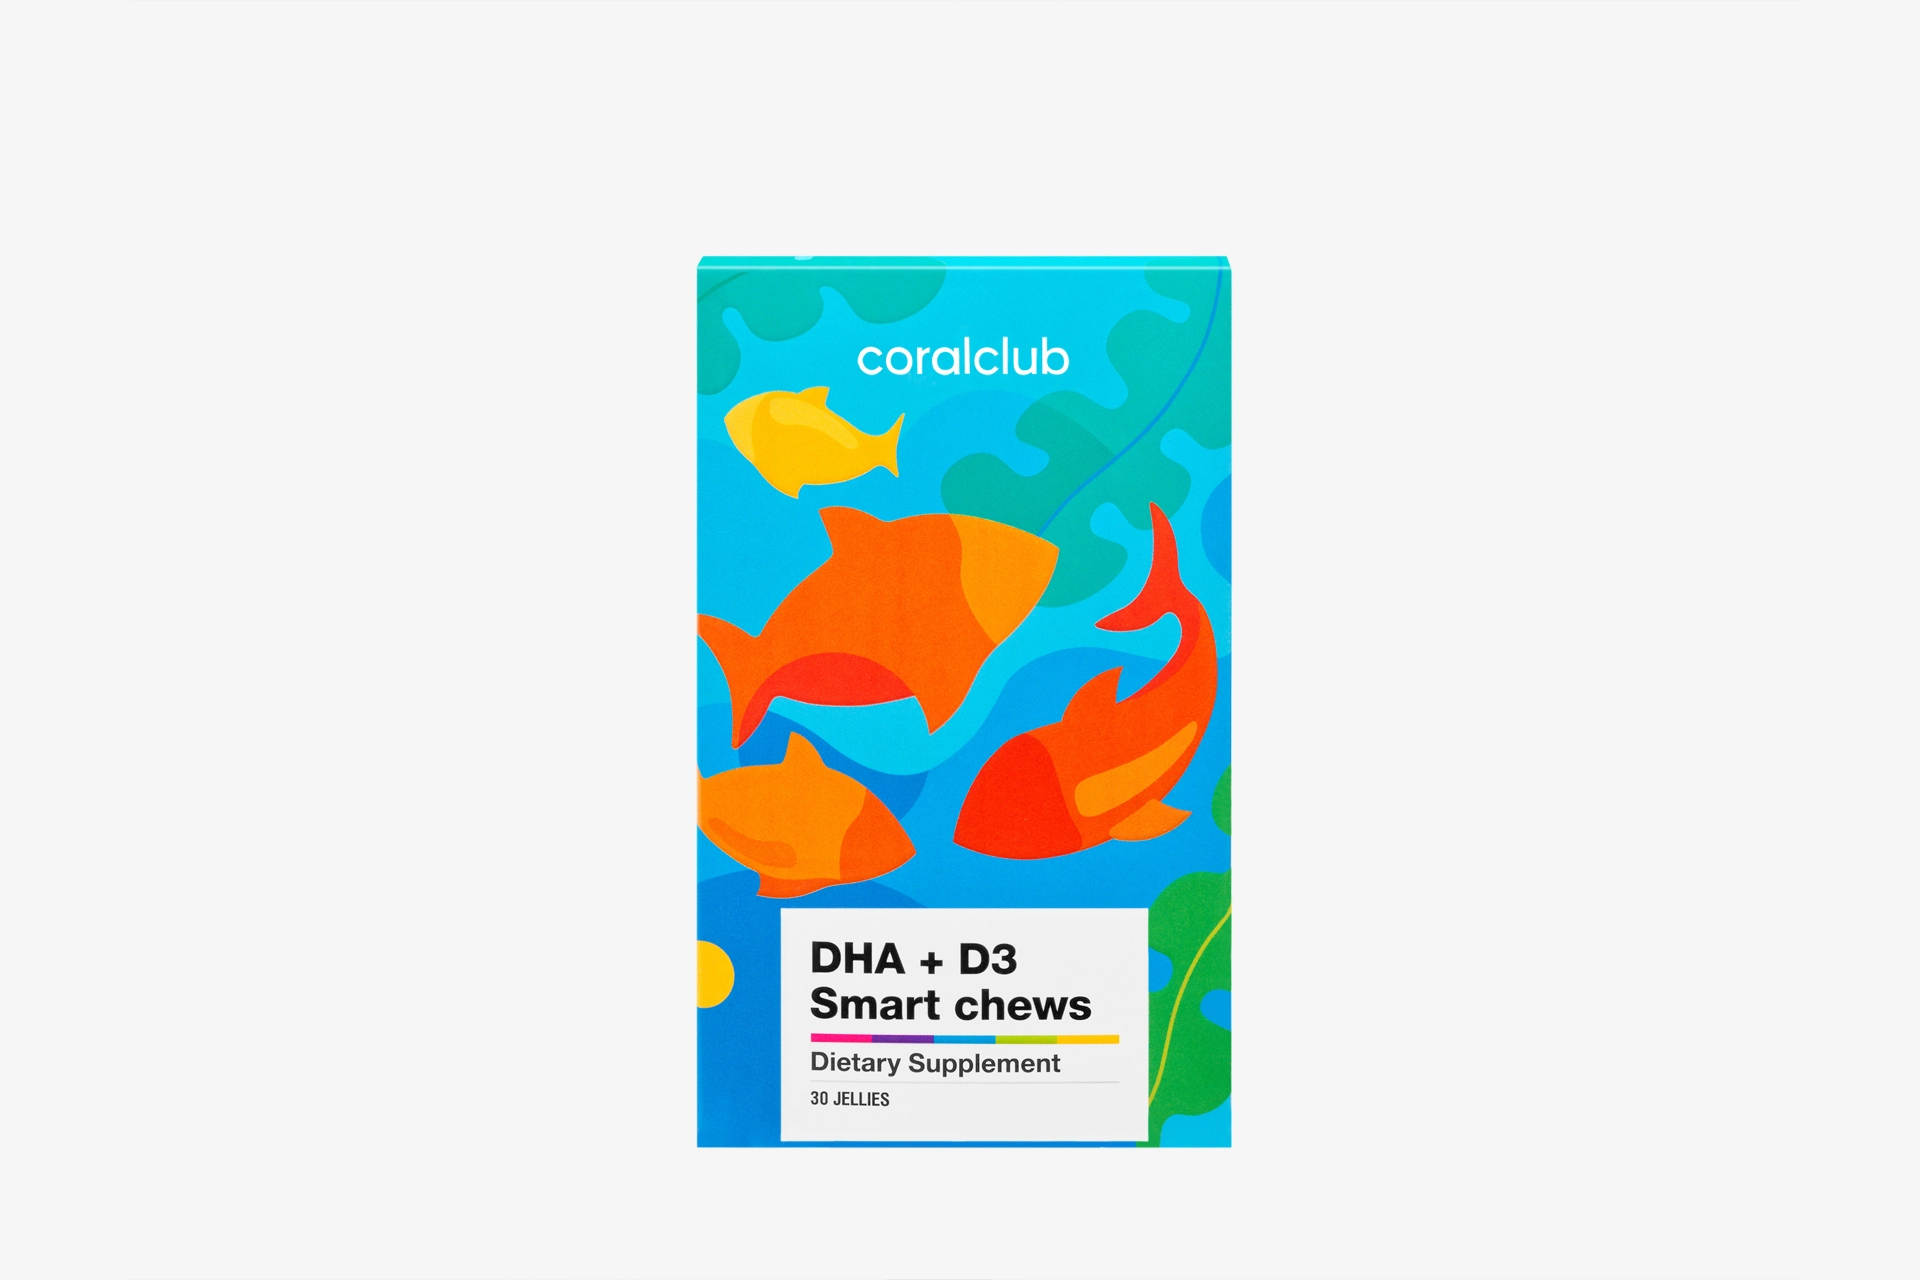 DHA+D3 Smart Chews